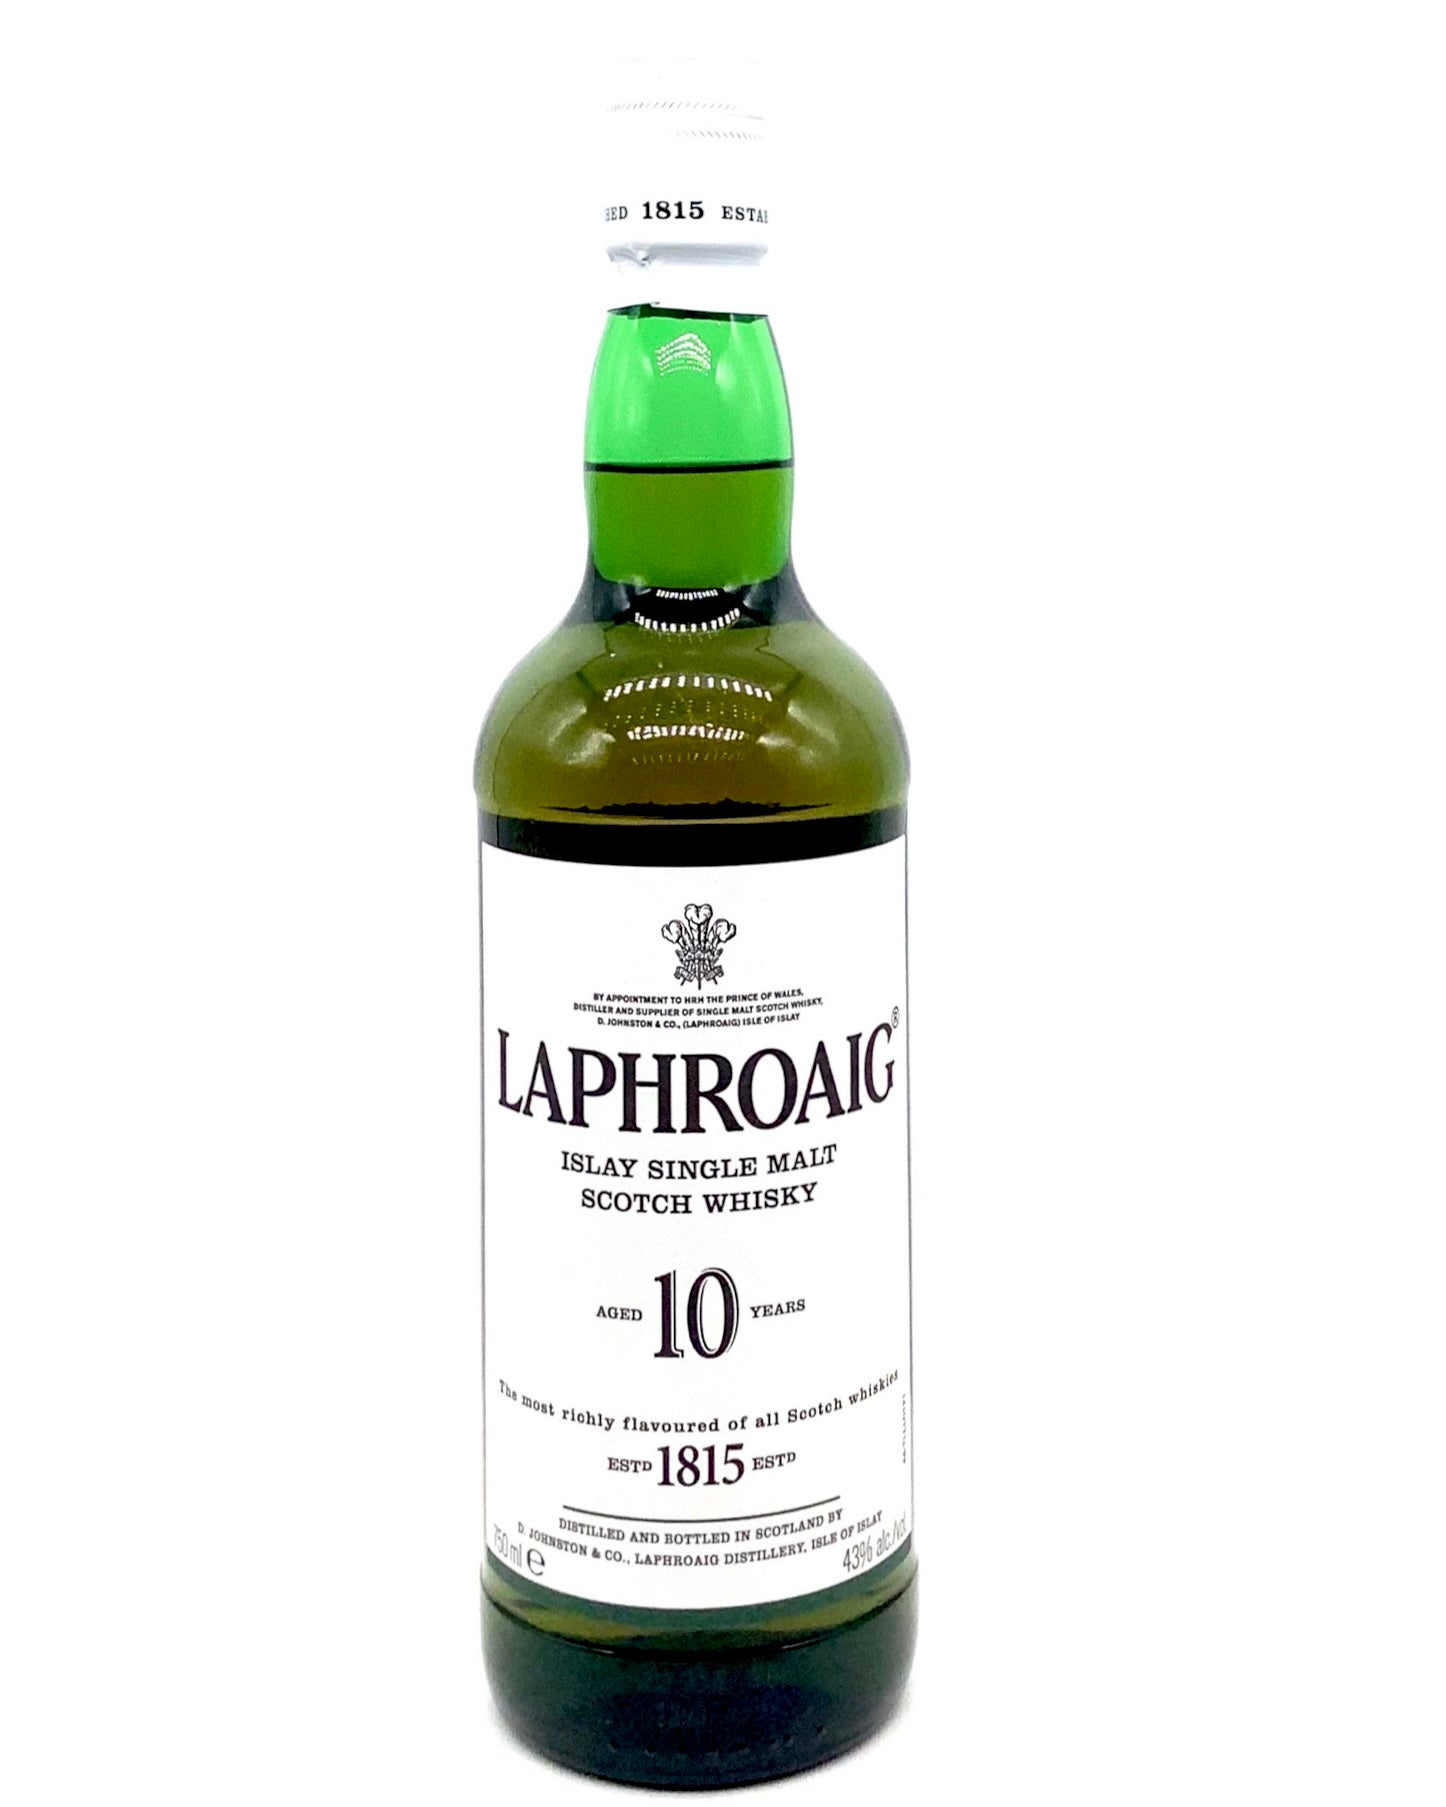 Laphroaig 10 Year Old Islay Scotch Whisky 750mL